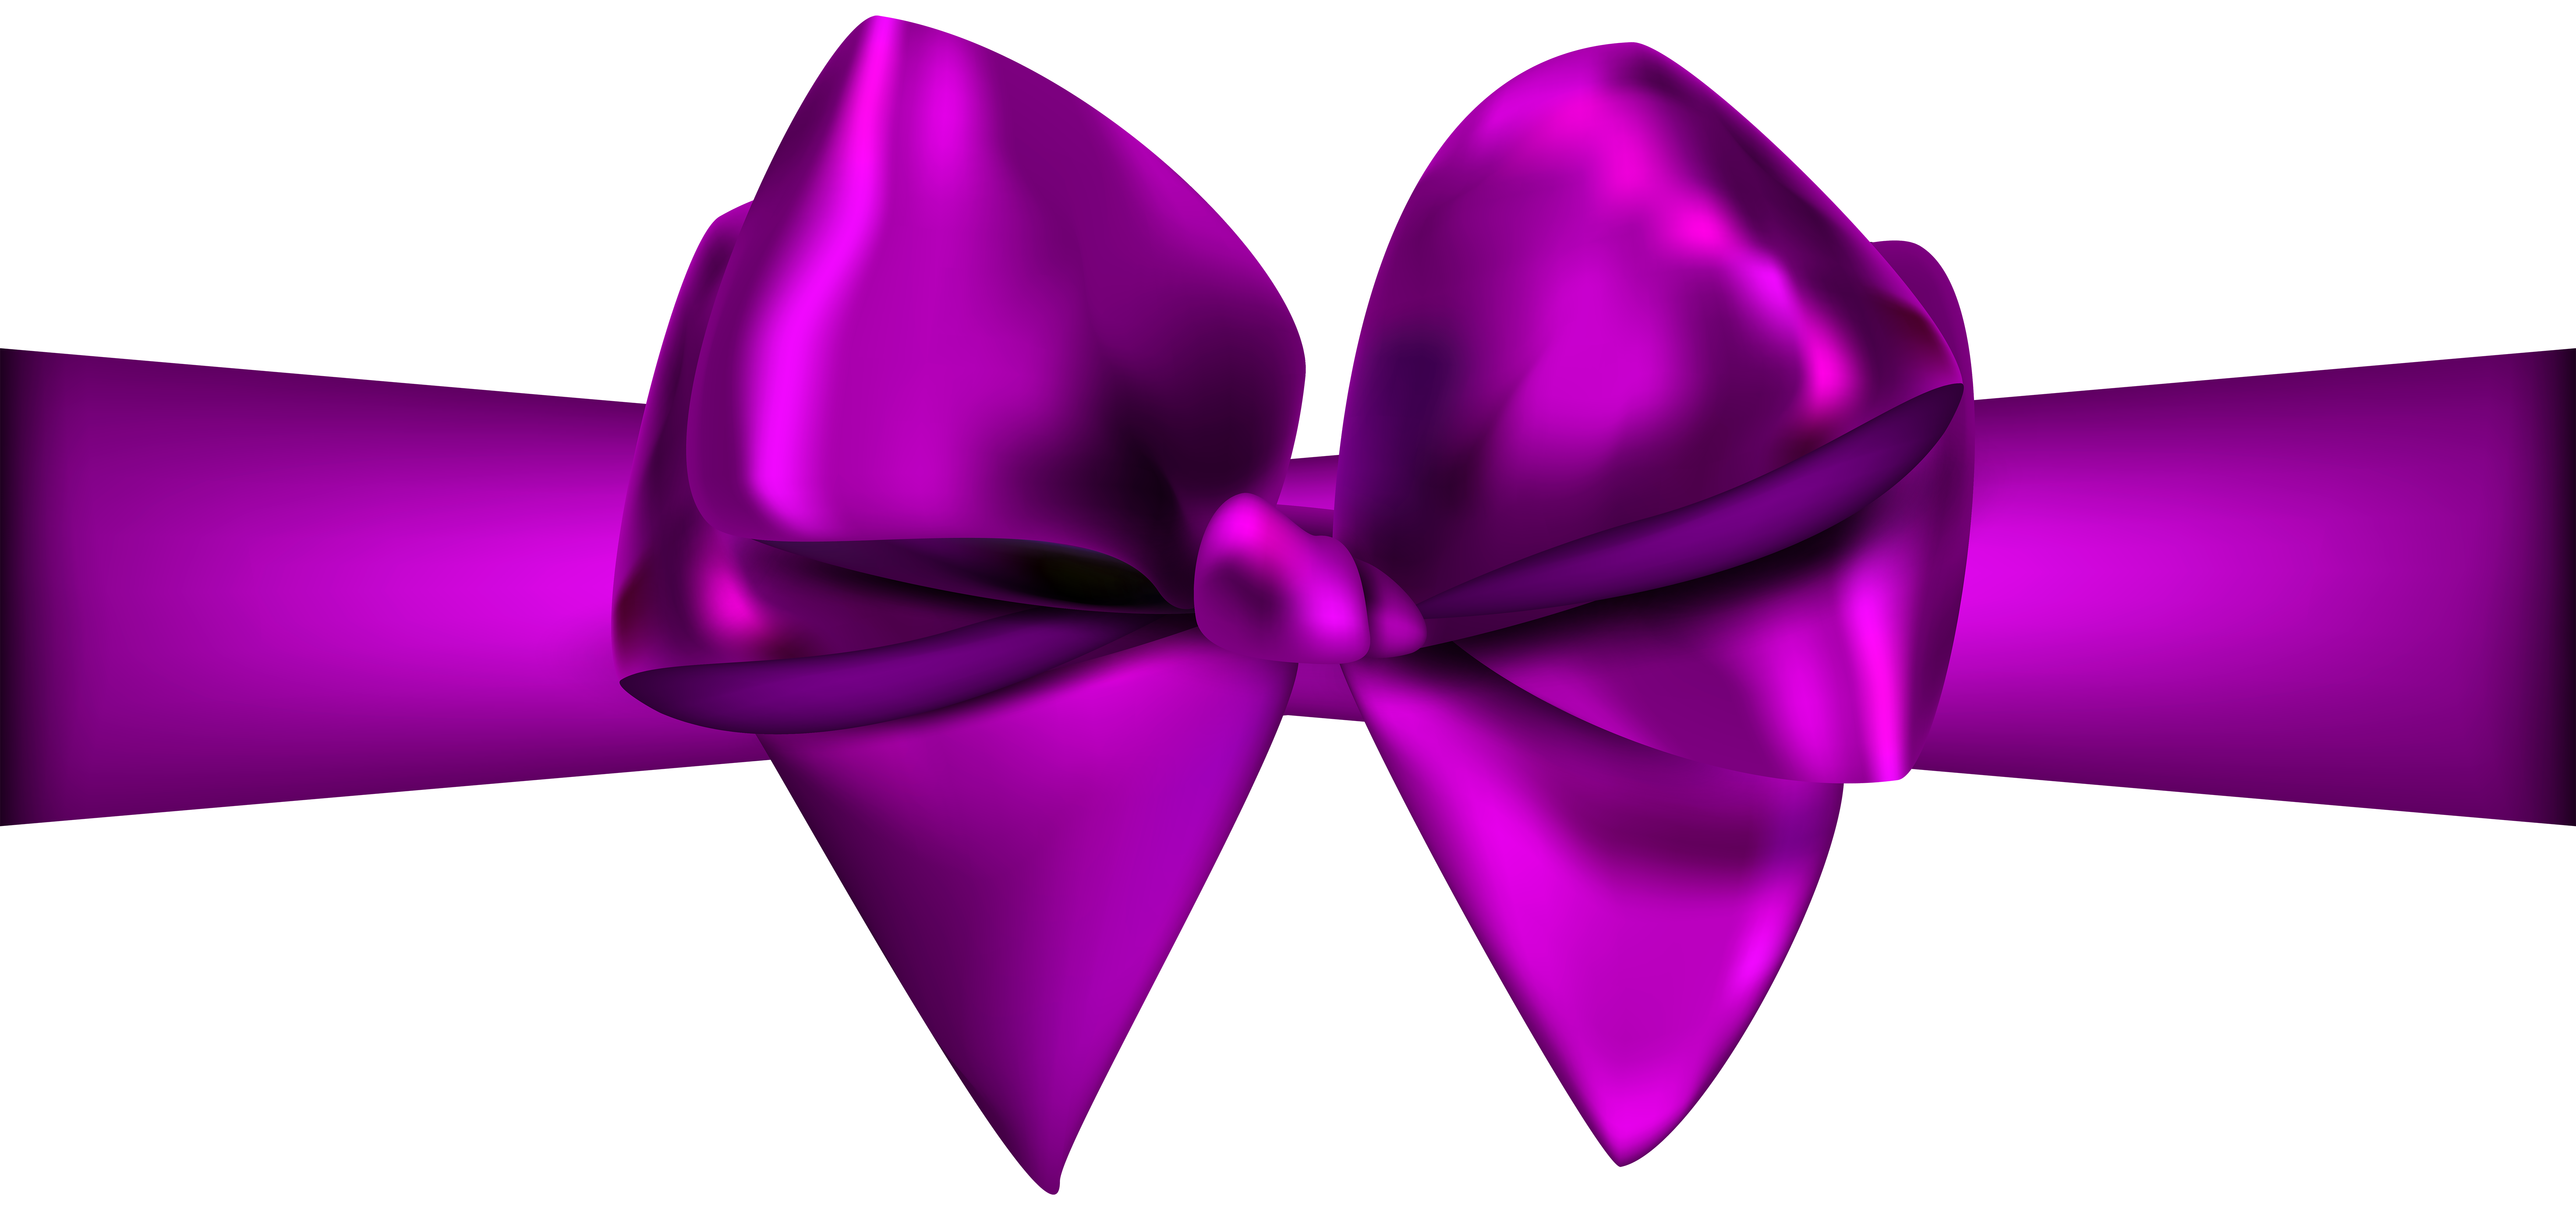 purple ribbon bow